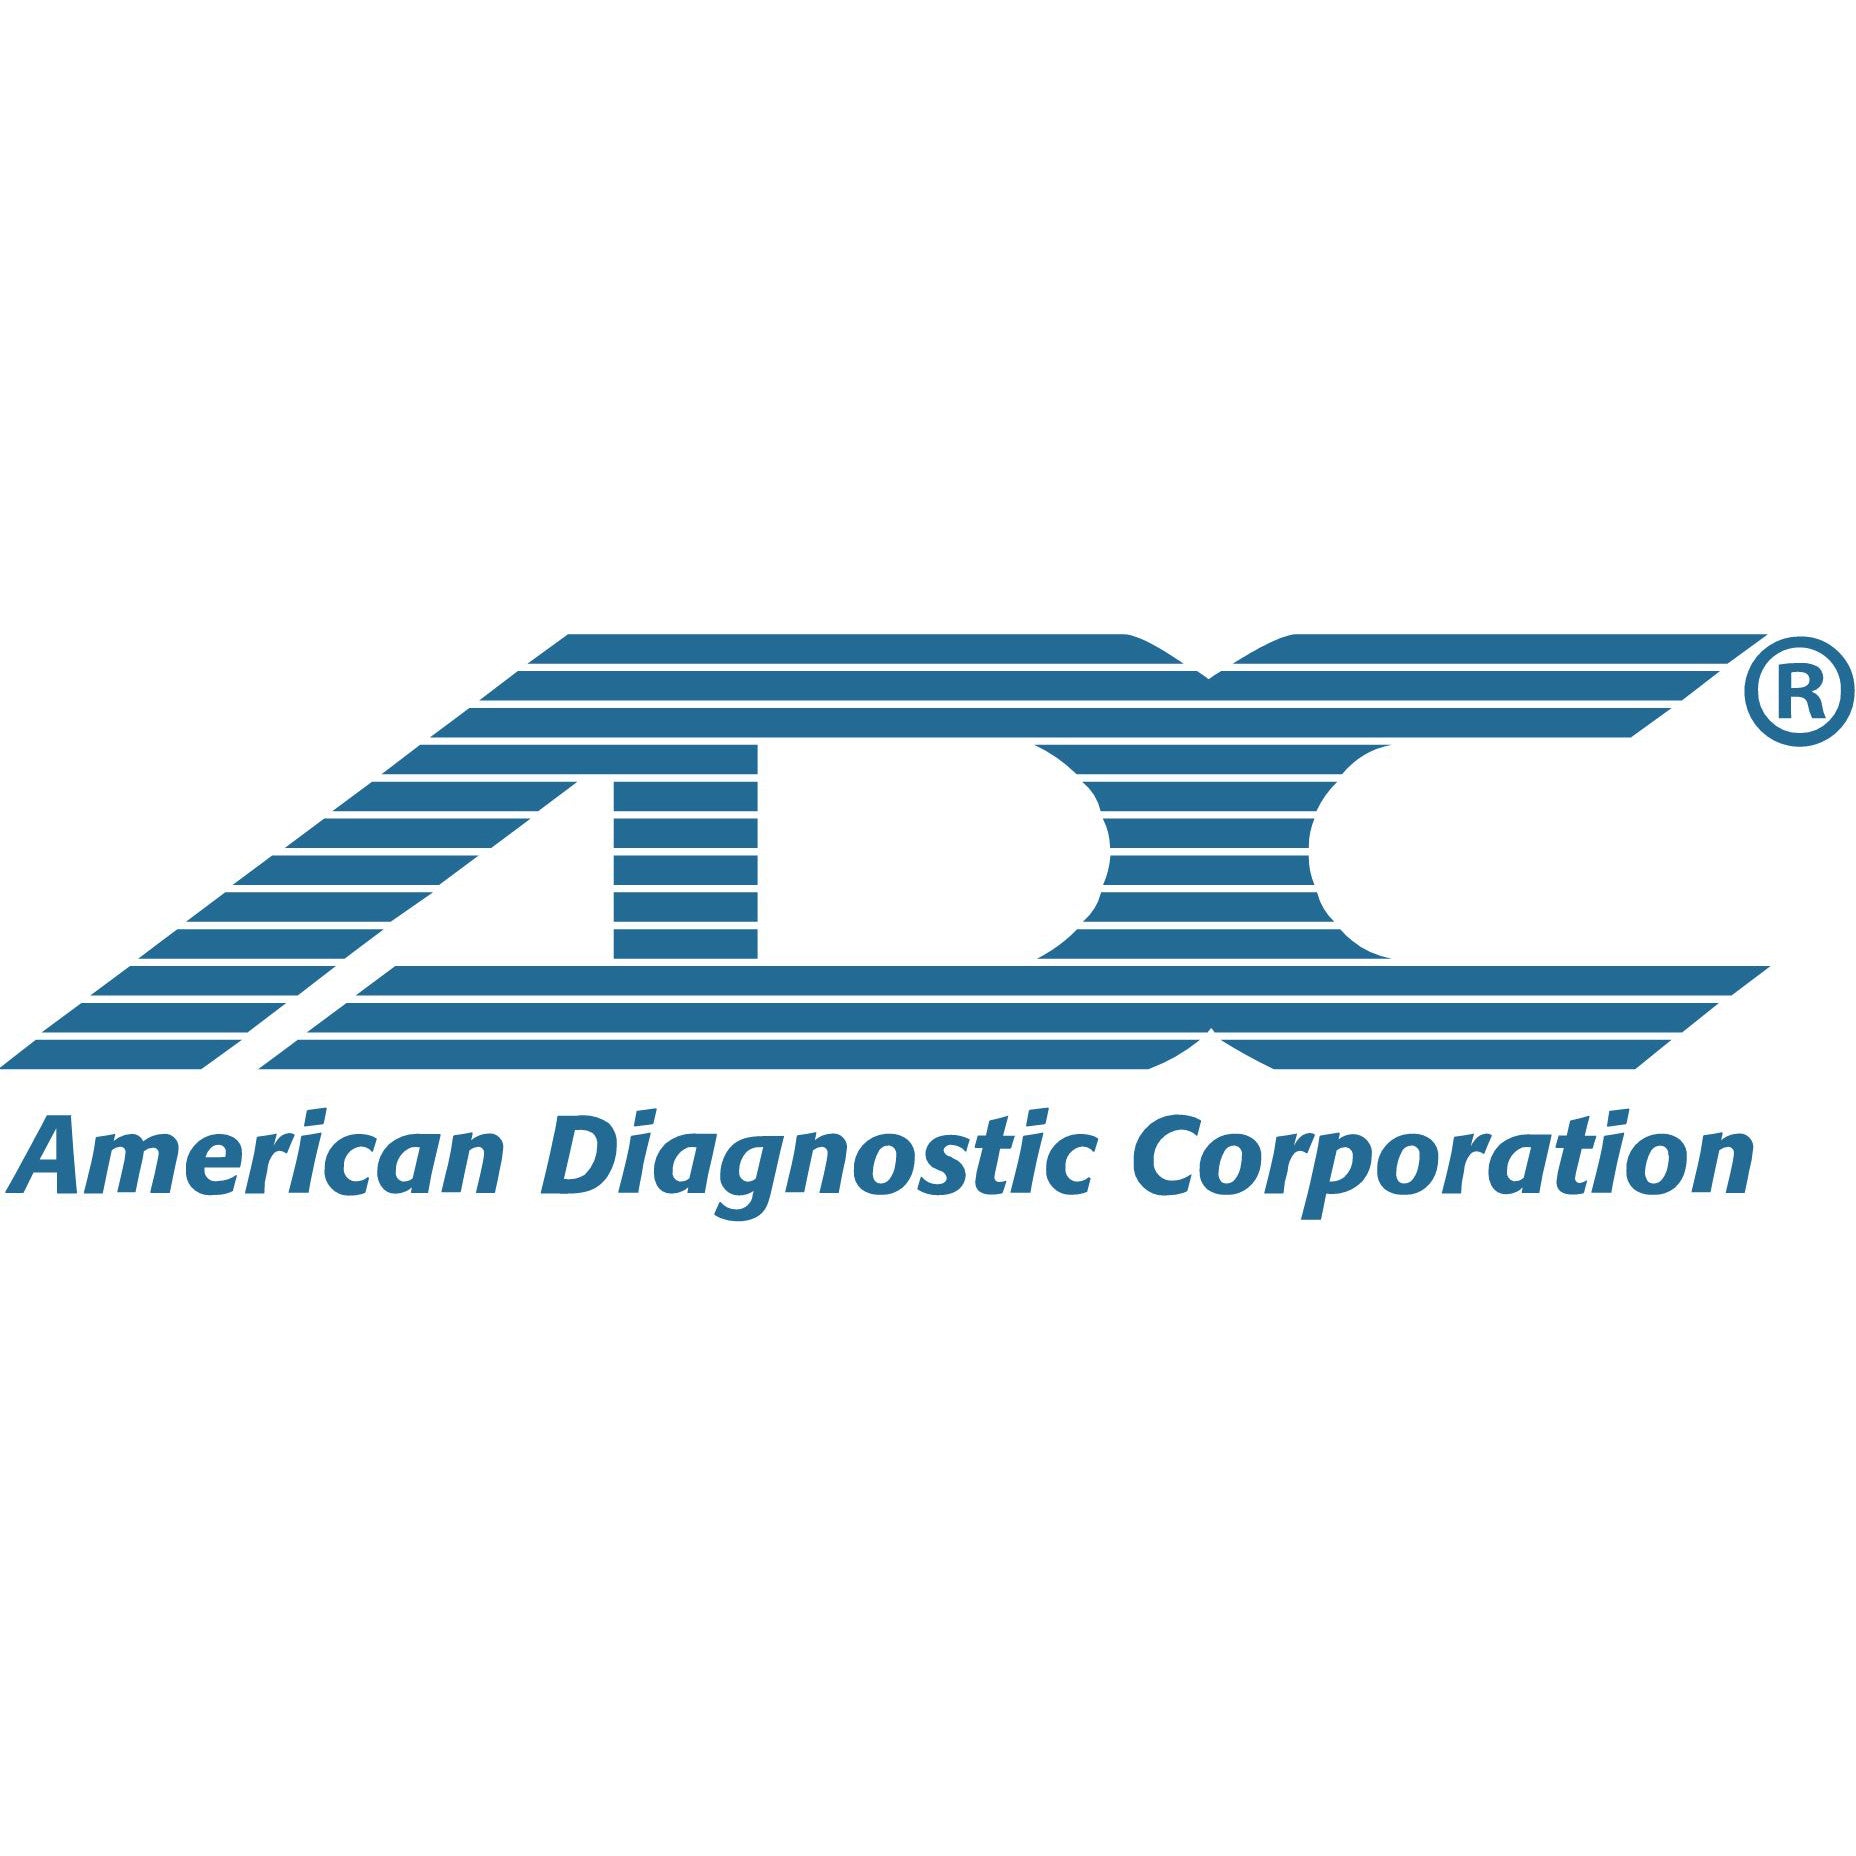 American Diagnostic Corporation: Manufacturer Spotlight